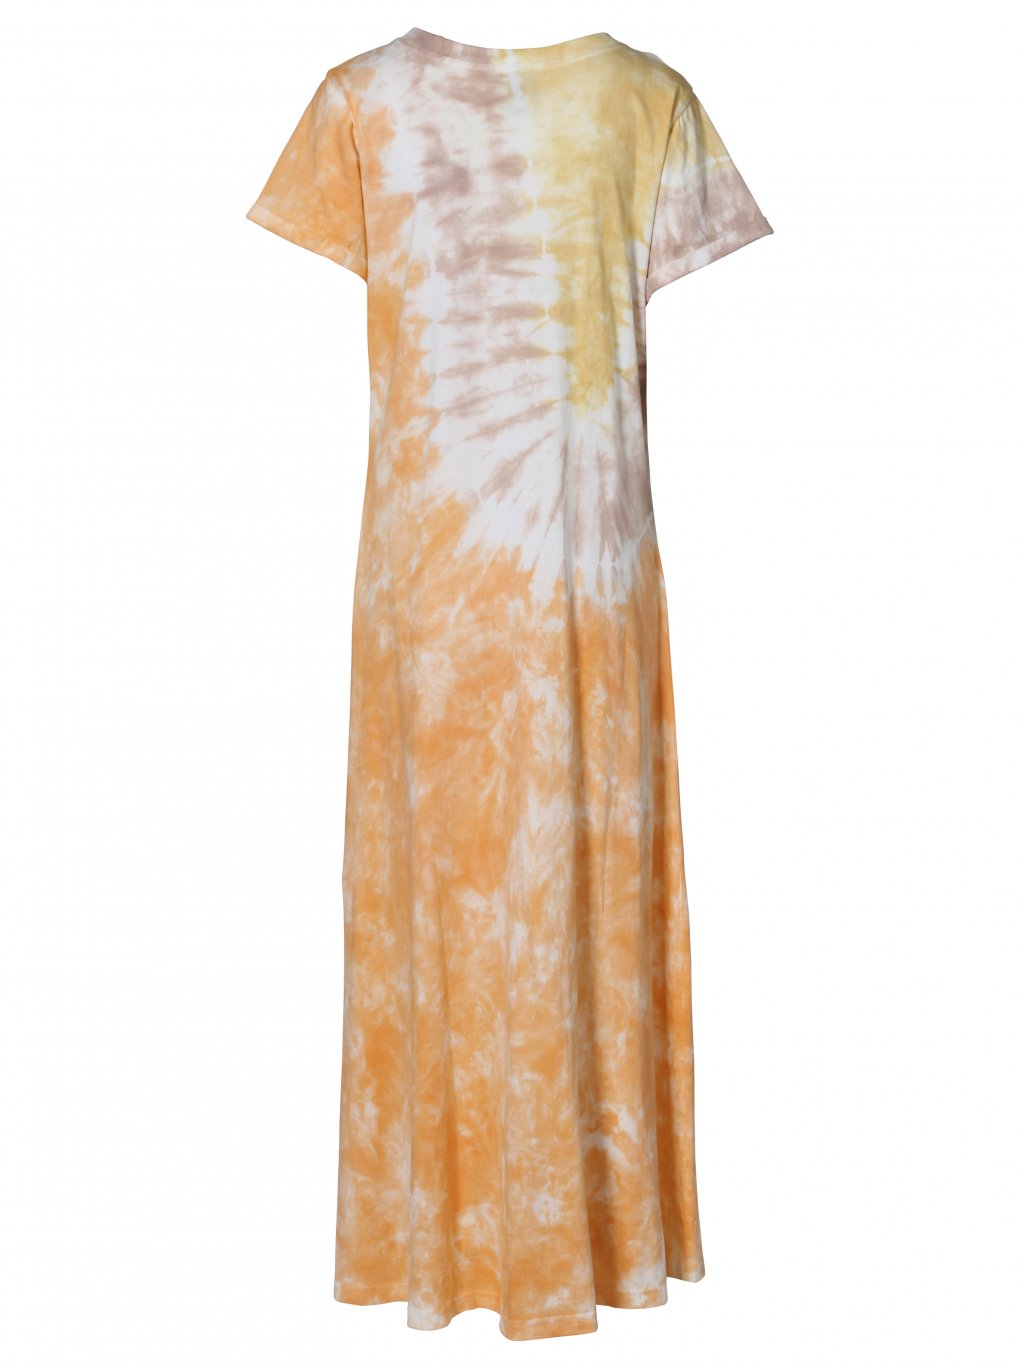 Šaty NU Denmark 7620-23 meruňkové batikované dlouhé